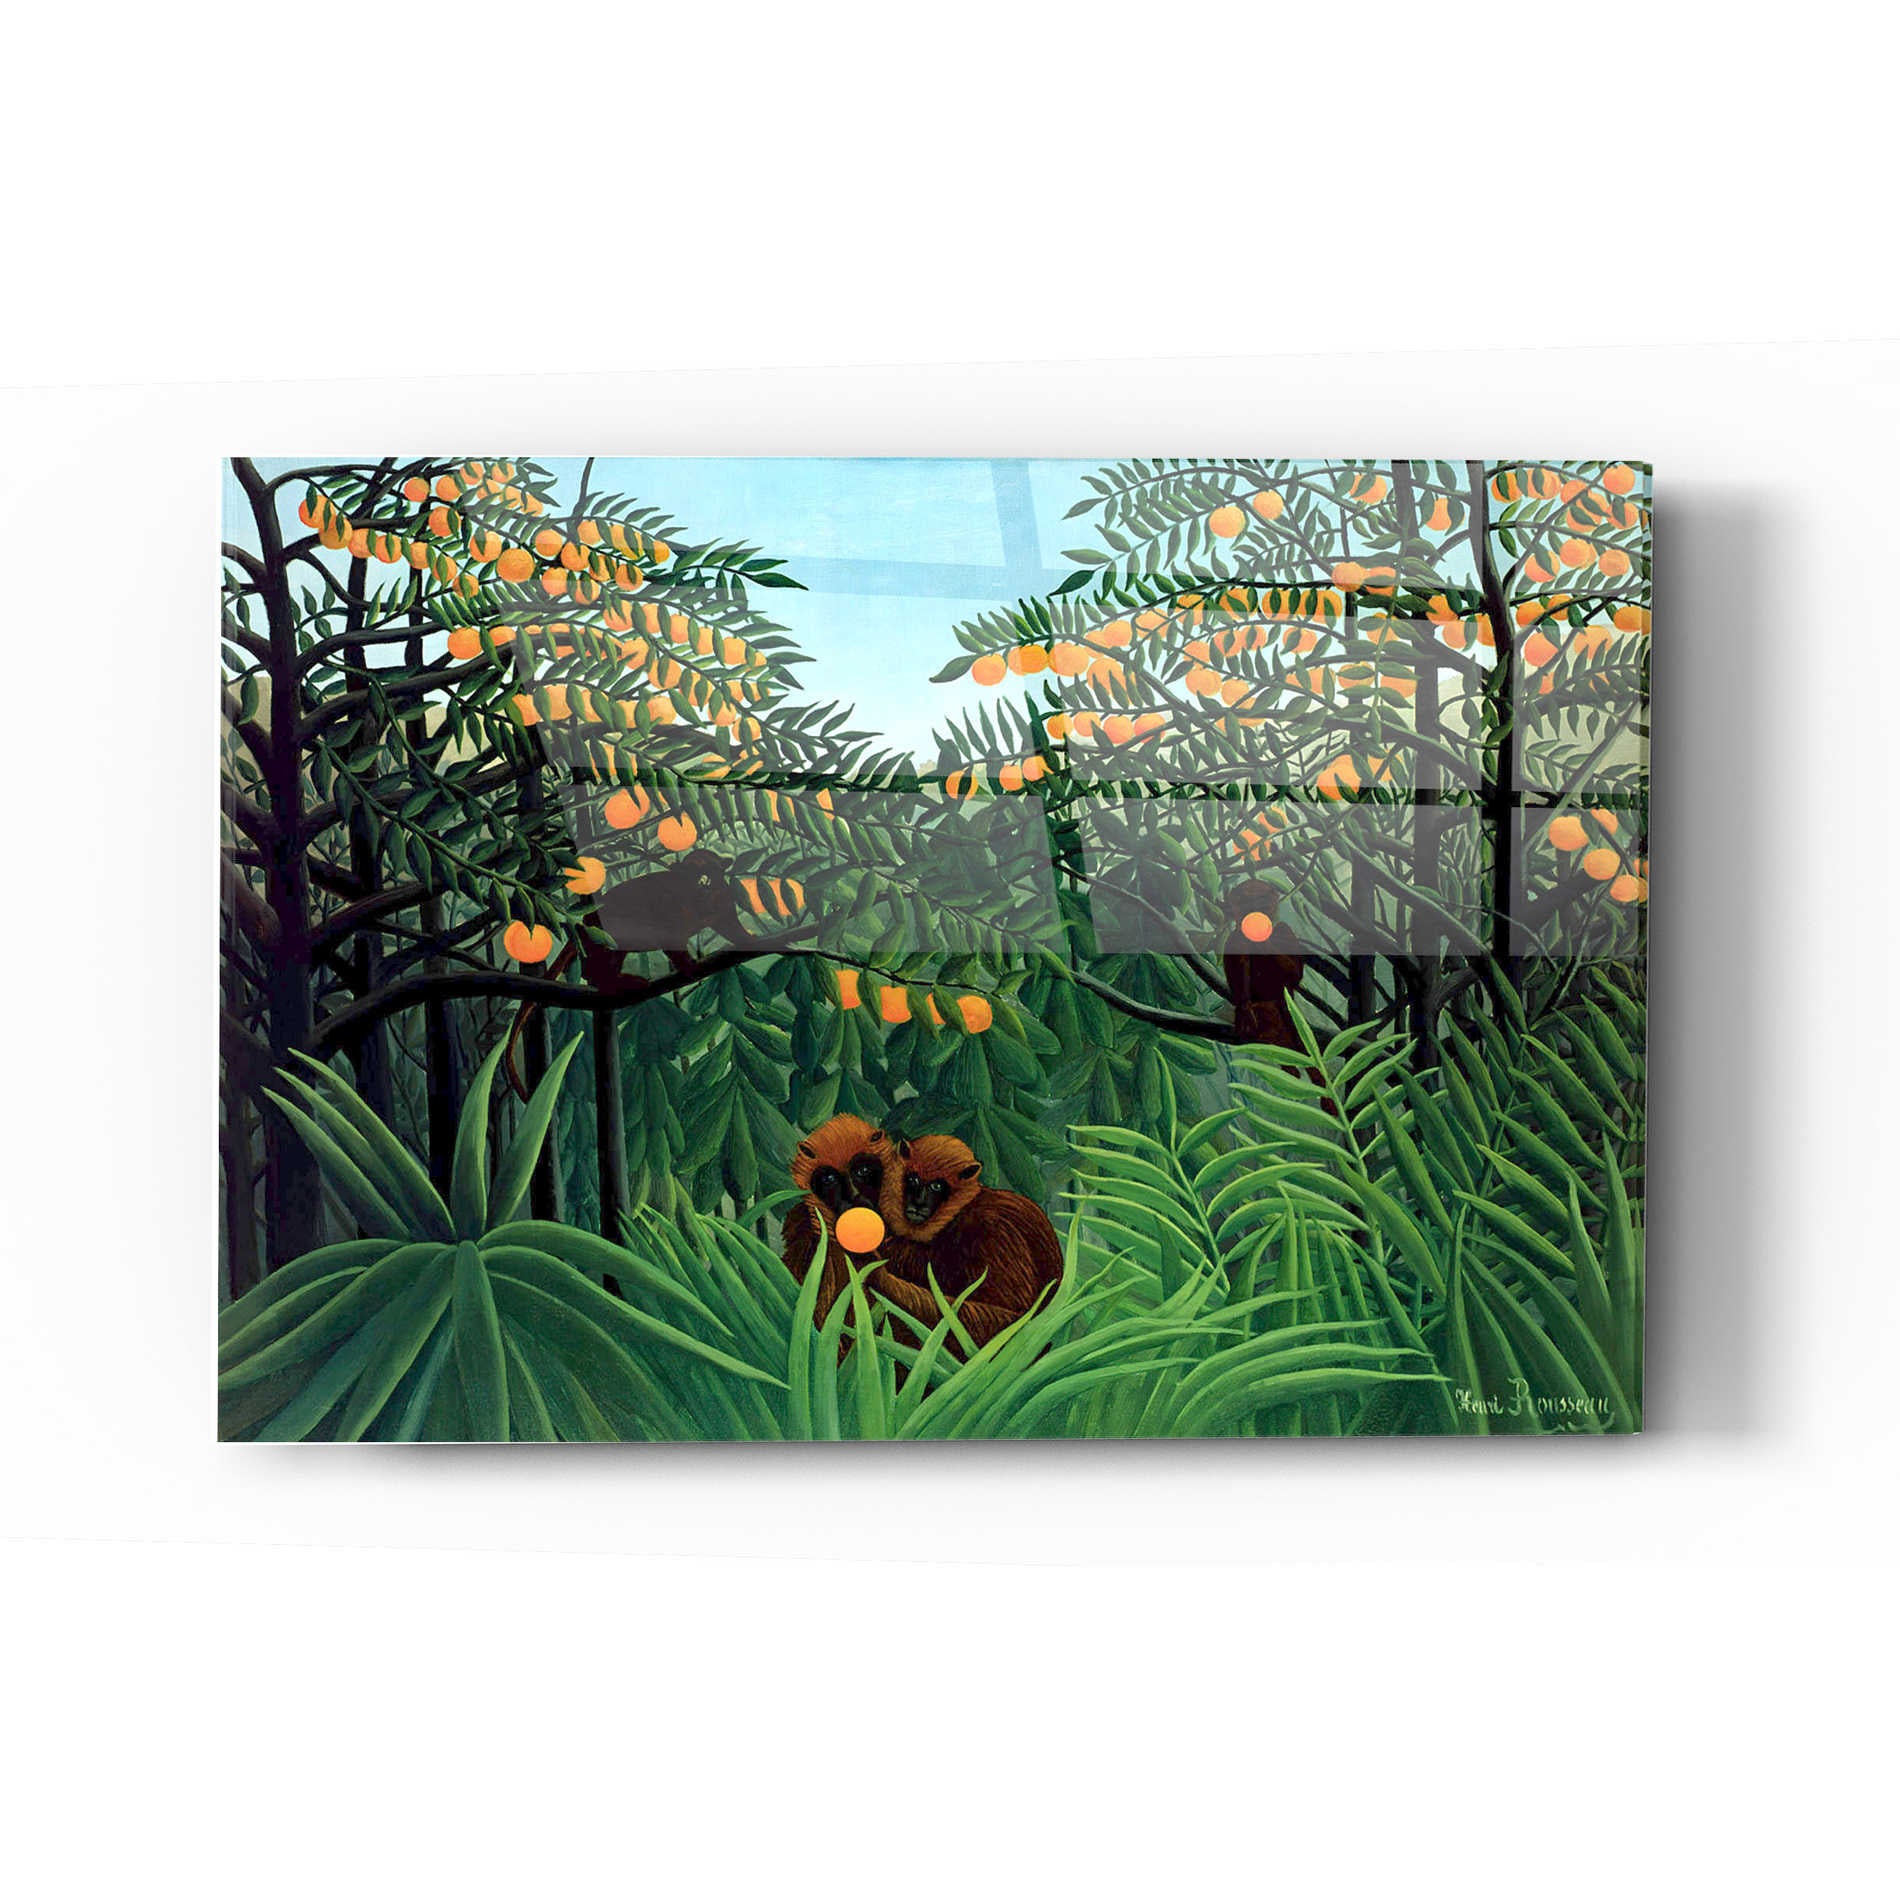 Epic Art 'The Tropics' by Henri Rousseau Acrylic Glass Wall Art,16x24